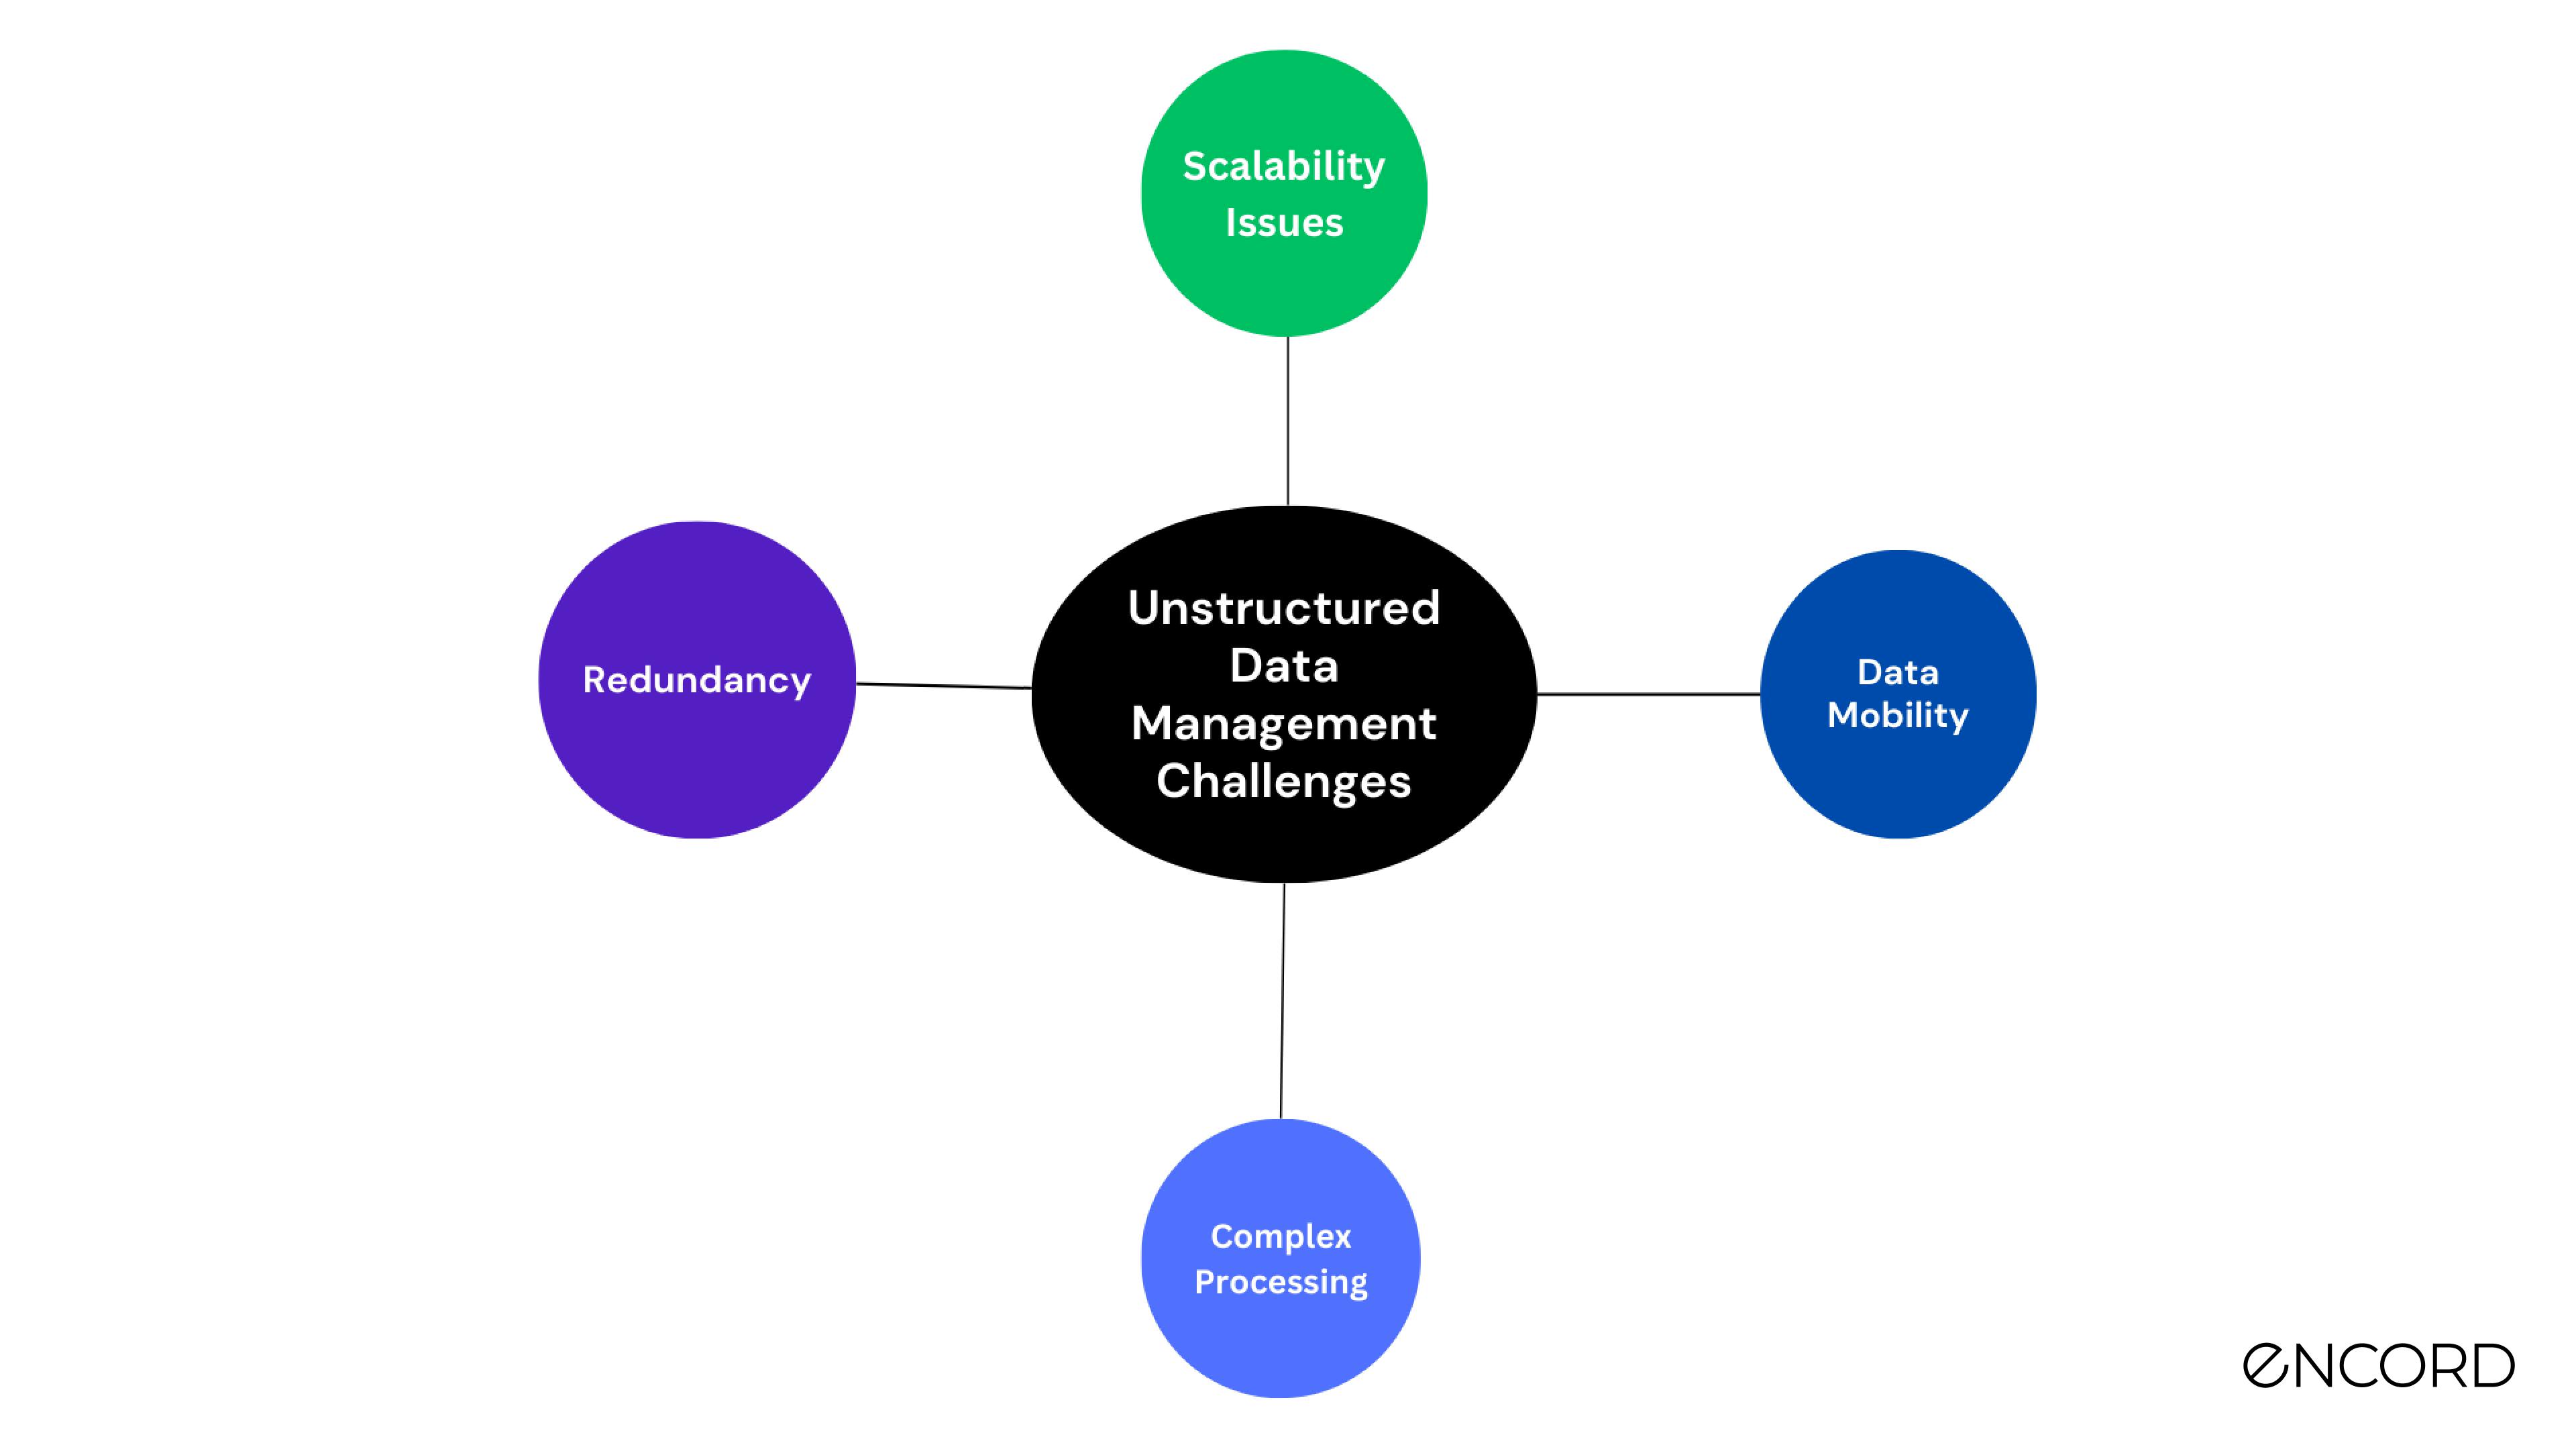 Unstructured Data Management Challenges